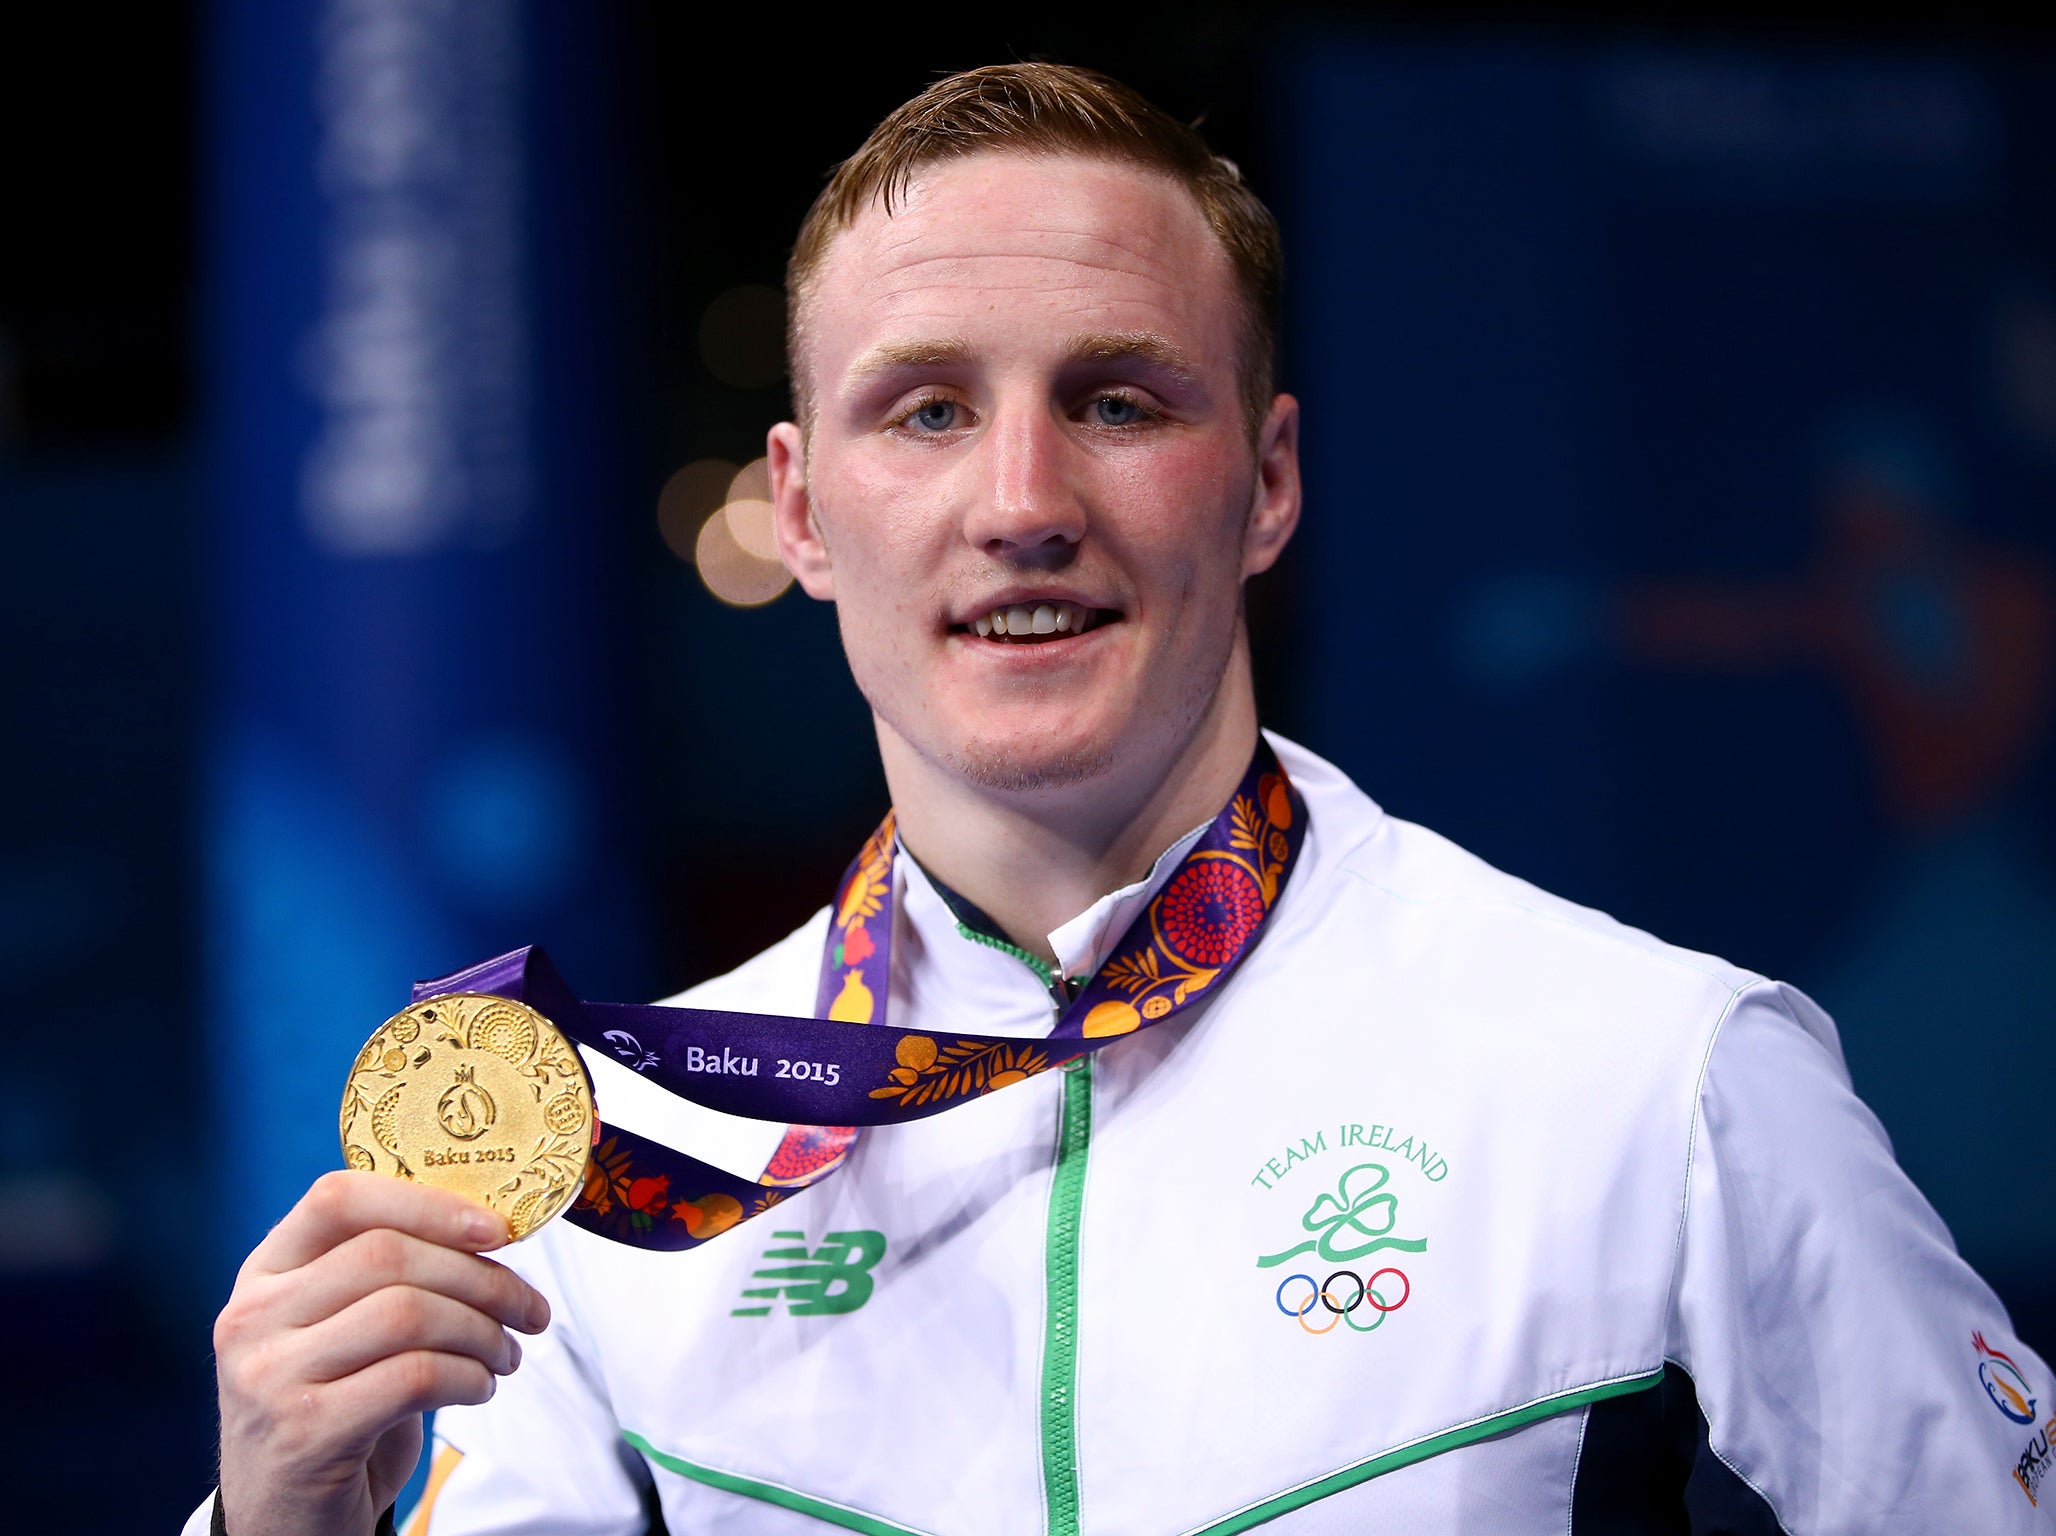 Michael O'Reilly won a gold medal at the Baku 2015 European Games